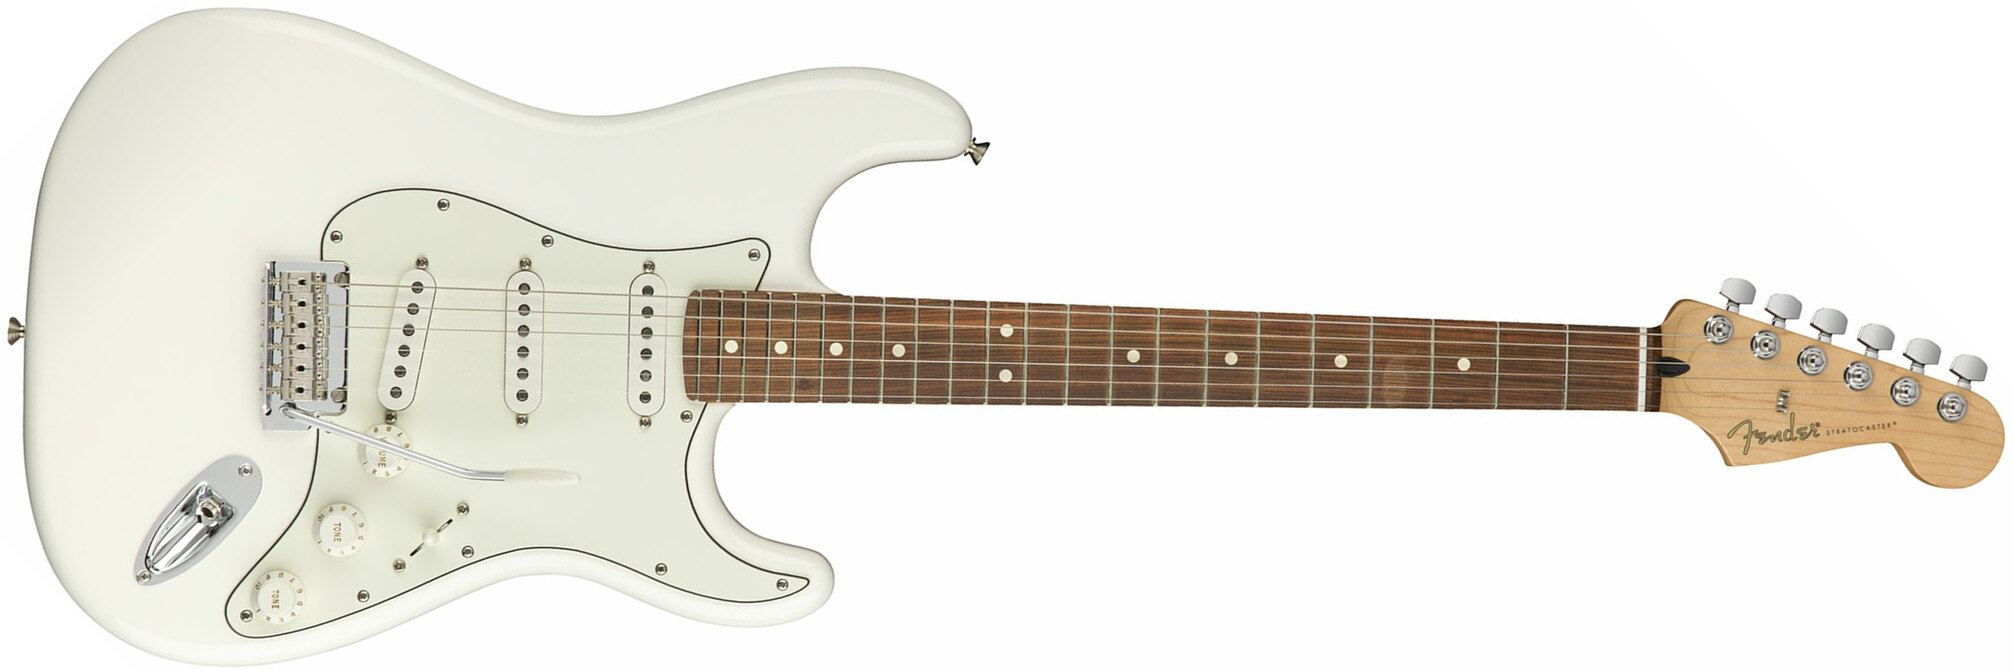 Fender Strat Player Mex Sss Pf - Polar White - Str shape electric guitar - Main picture